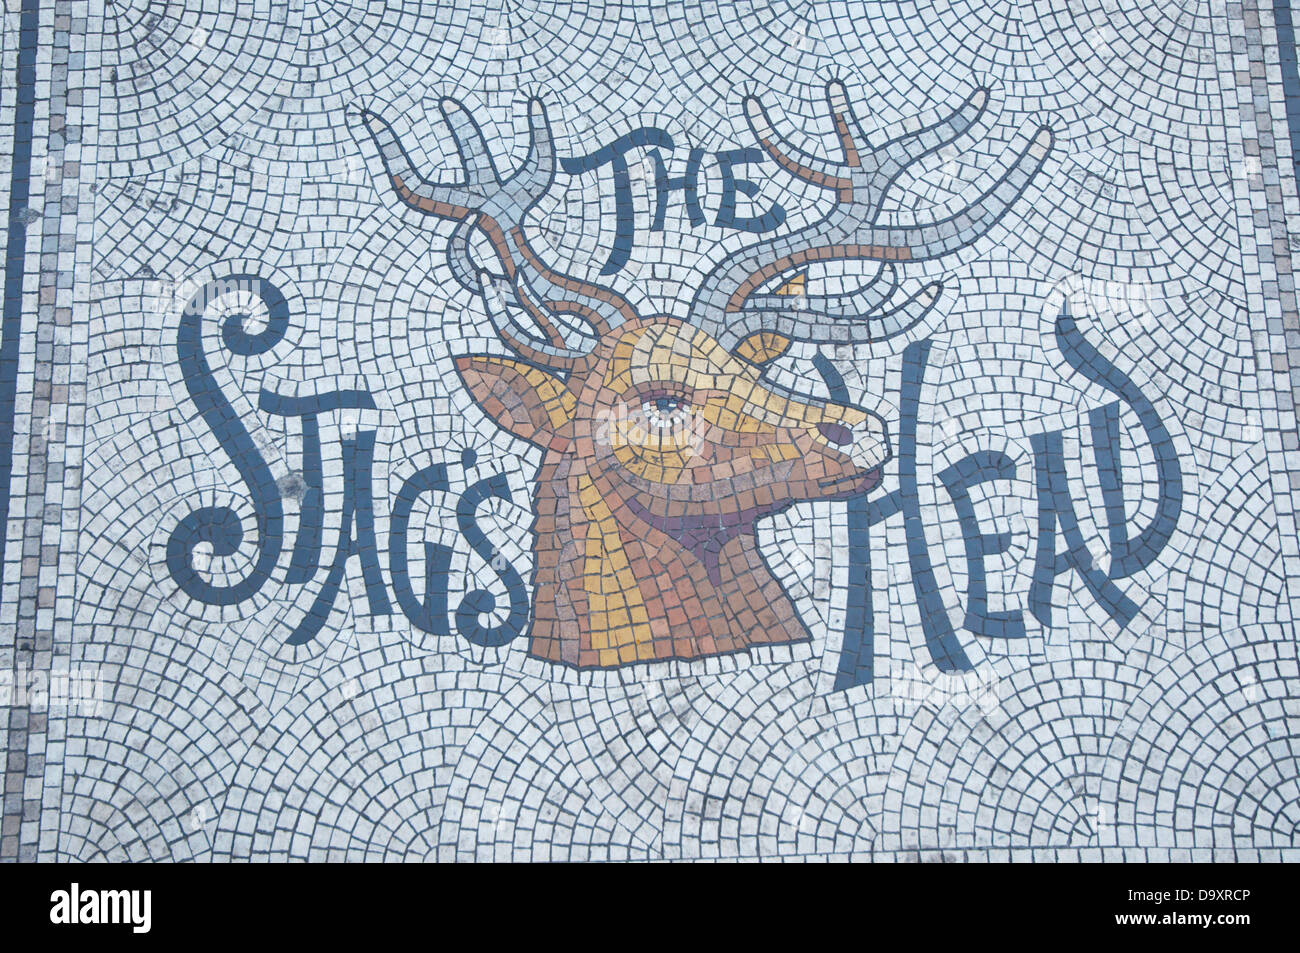 Stag's Head pub sign Dublin Ireland Europe Stock Photo